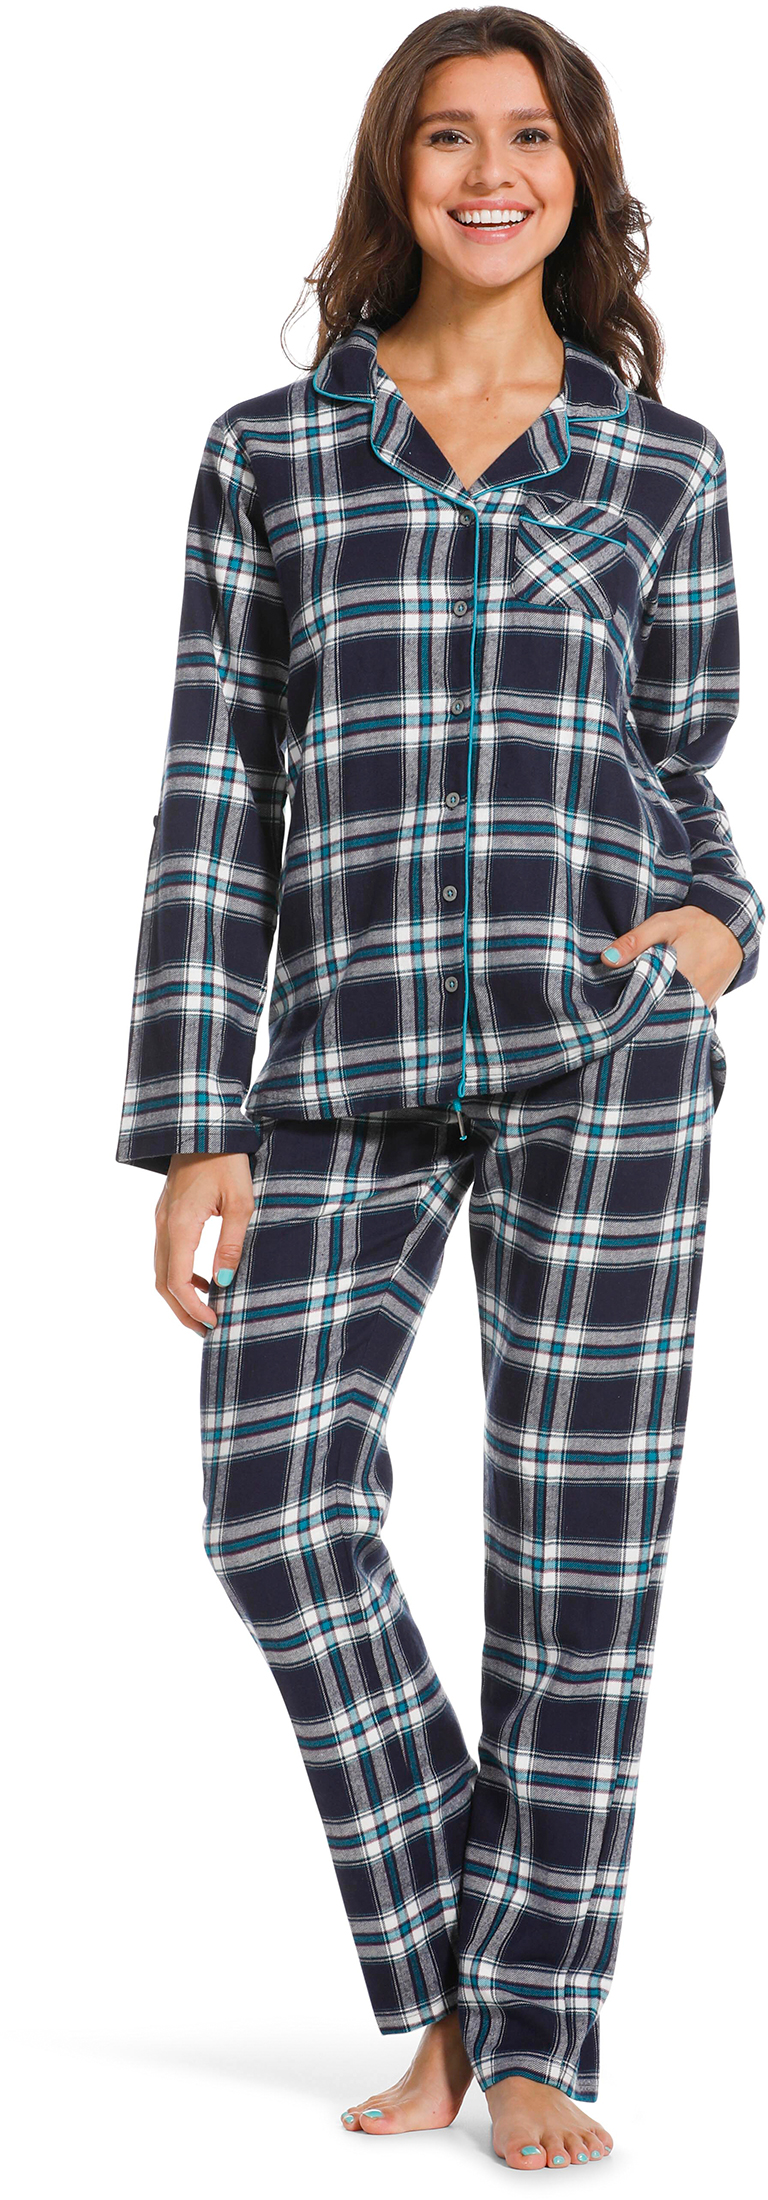 Rebelle dames pyjama flanel 21222-408-6 - Blauw - 40